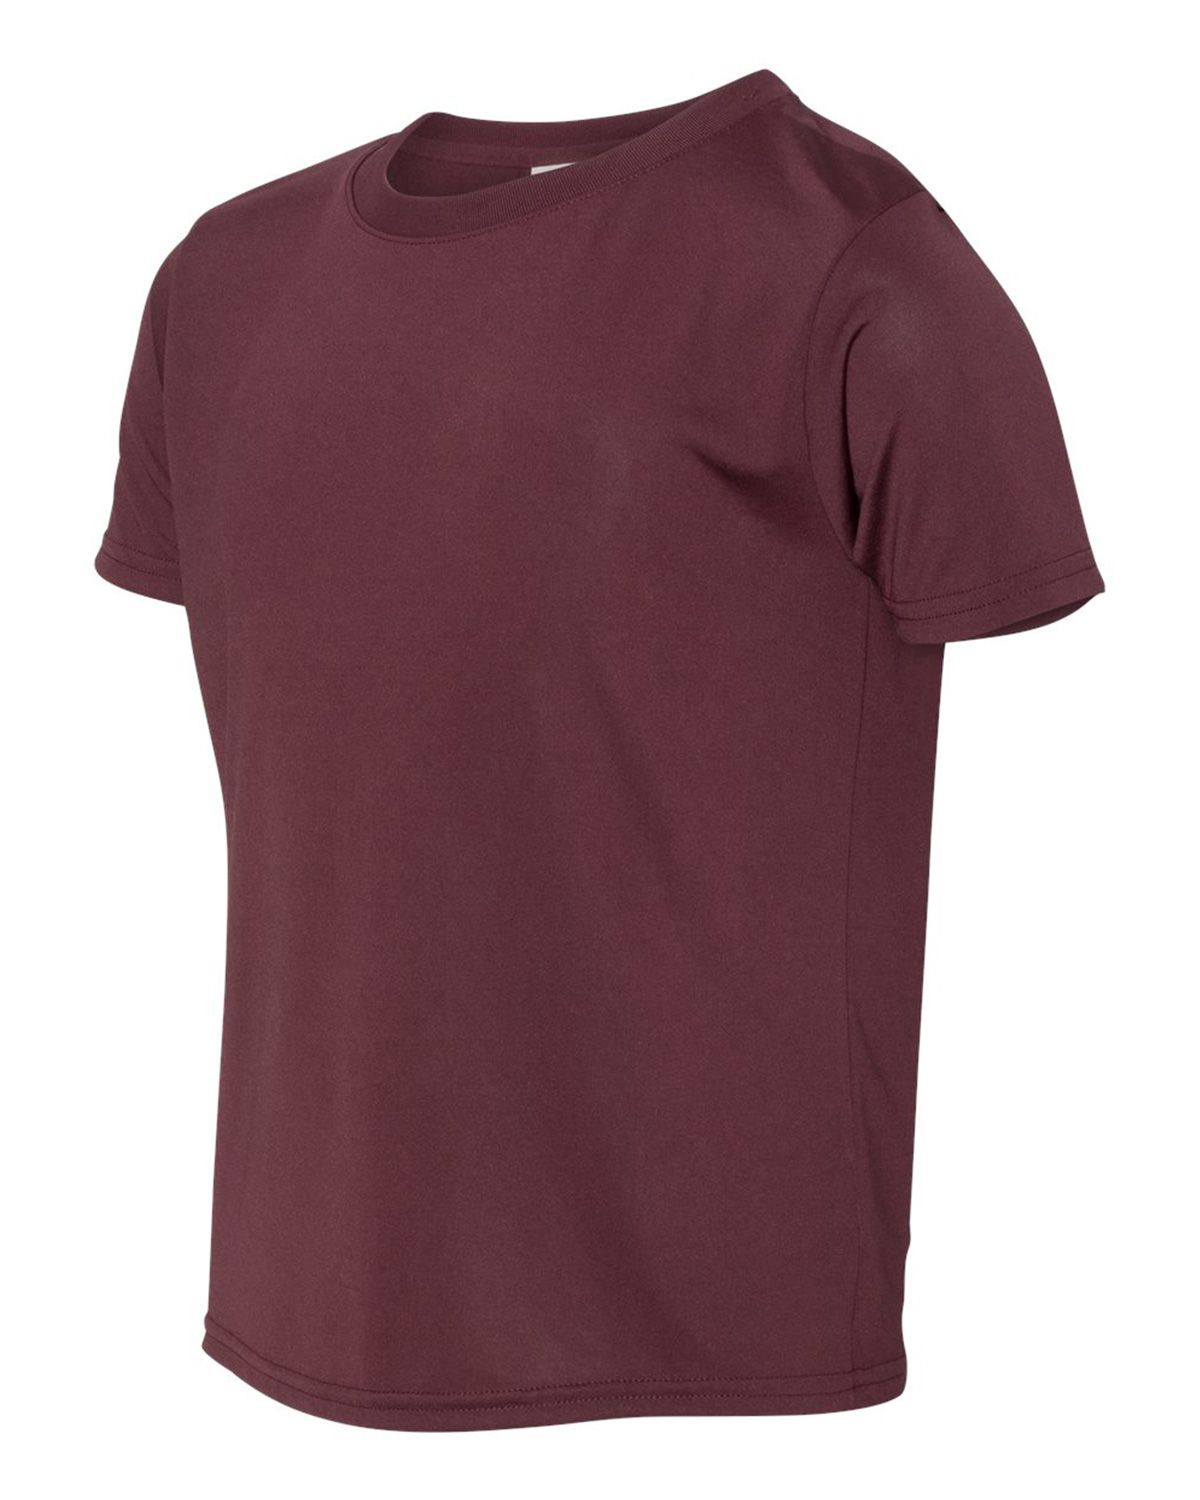 Gildan Brand Shirts Size Chart